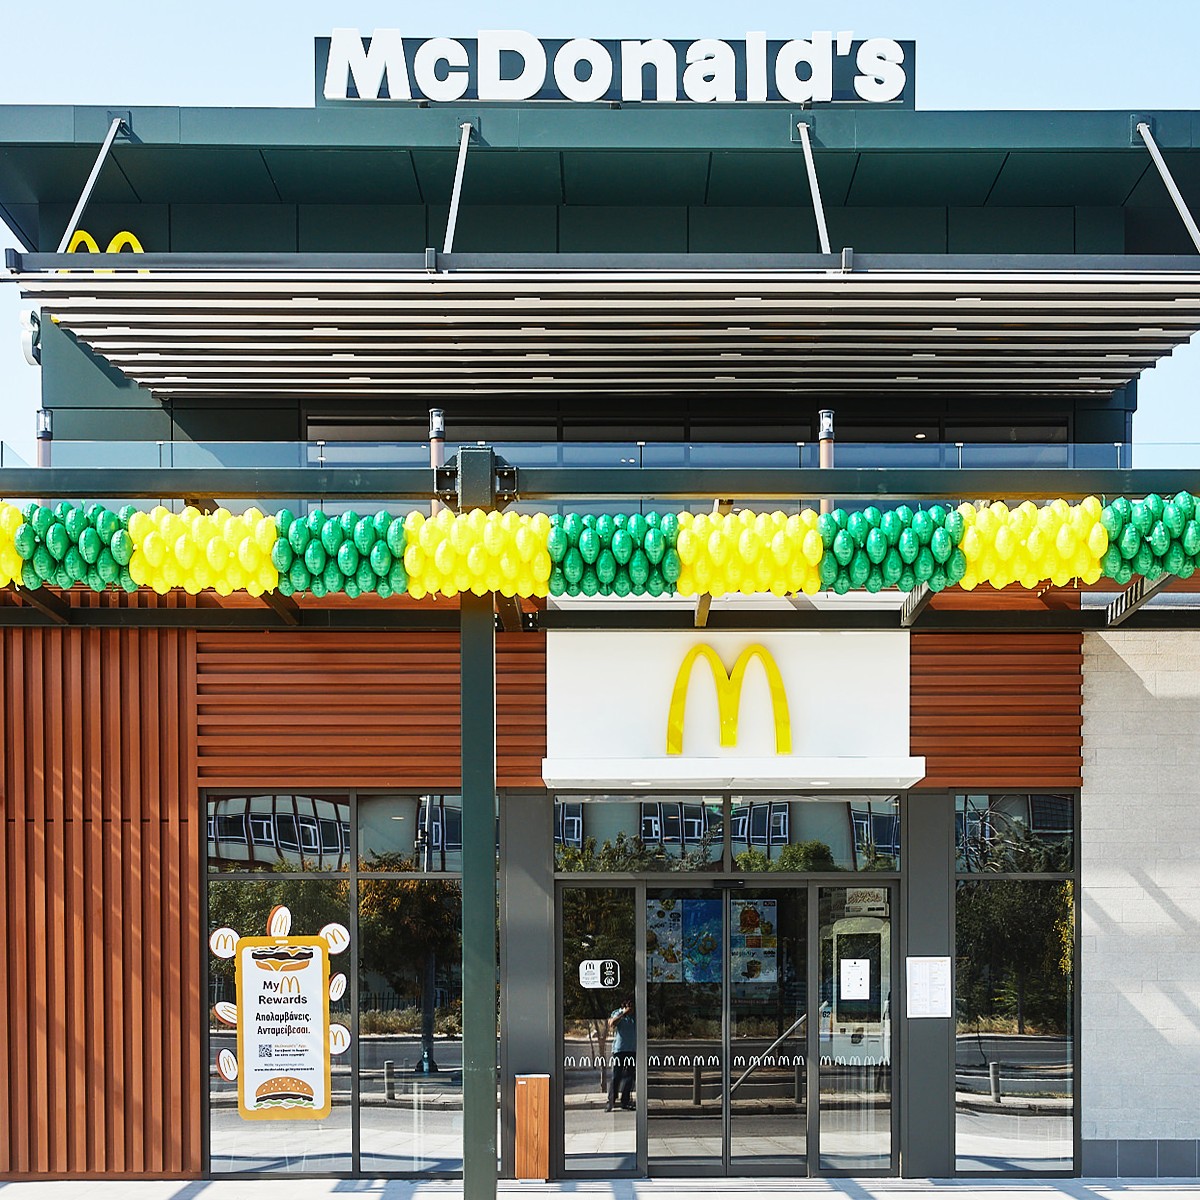 Premier Capital Ελλάς: Νέο κατάστημα McDonald’s στη Θεσσαλονίκη